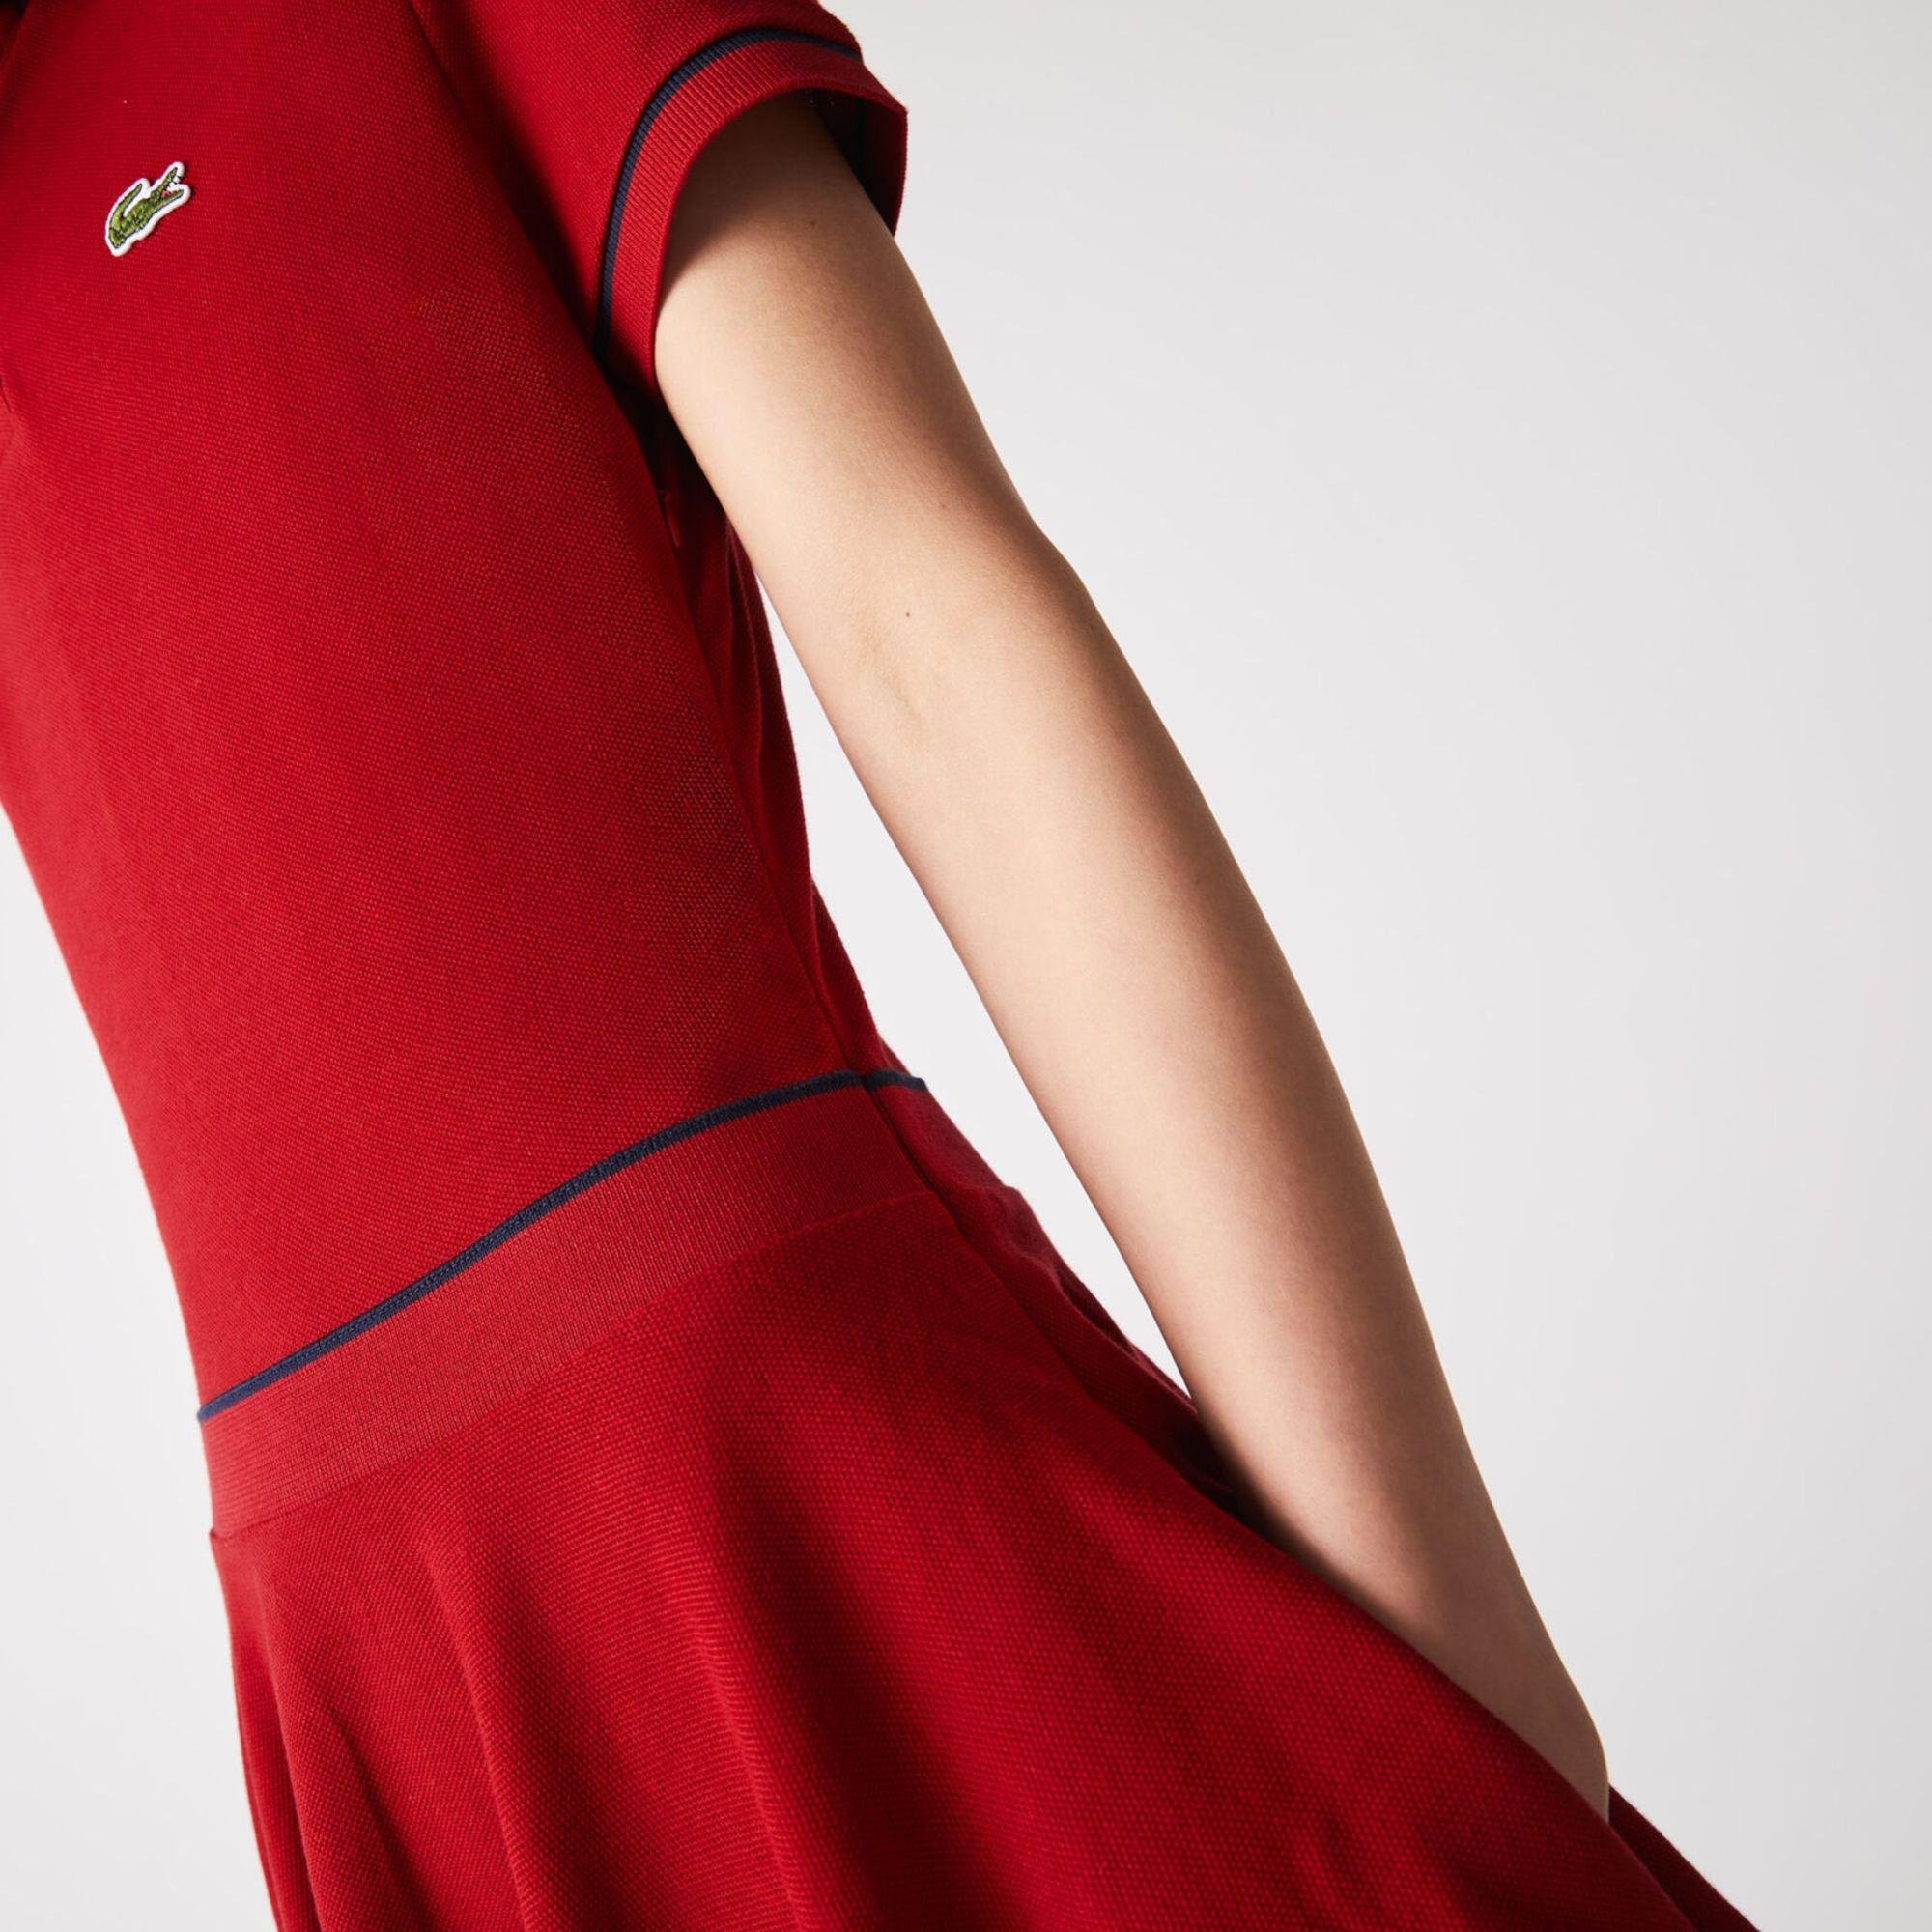 Lacoste Women's Made in France Organic Cotton Petit Piqué Polo Dress